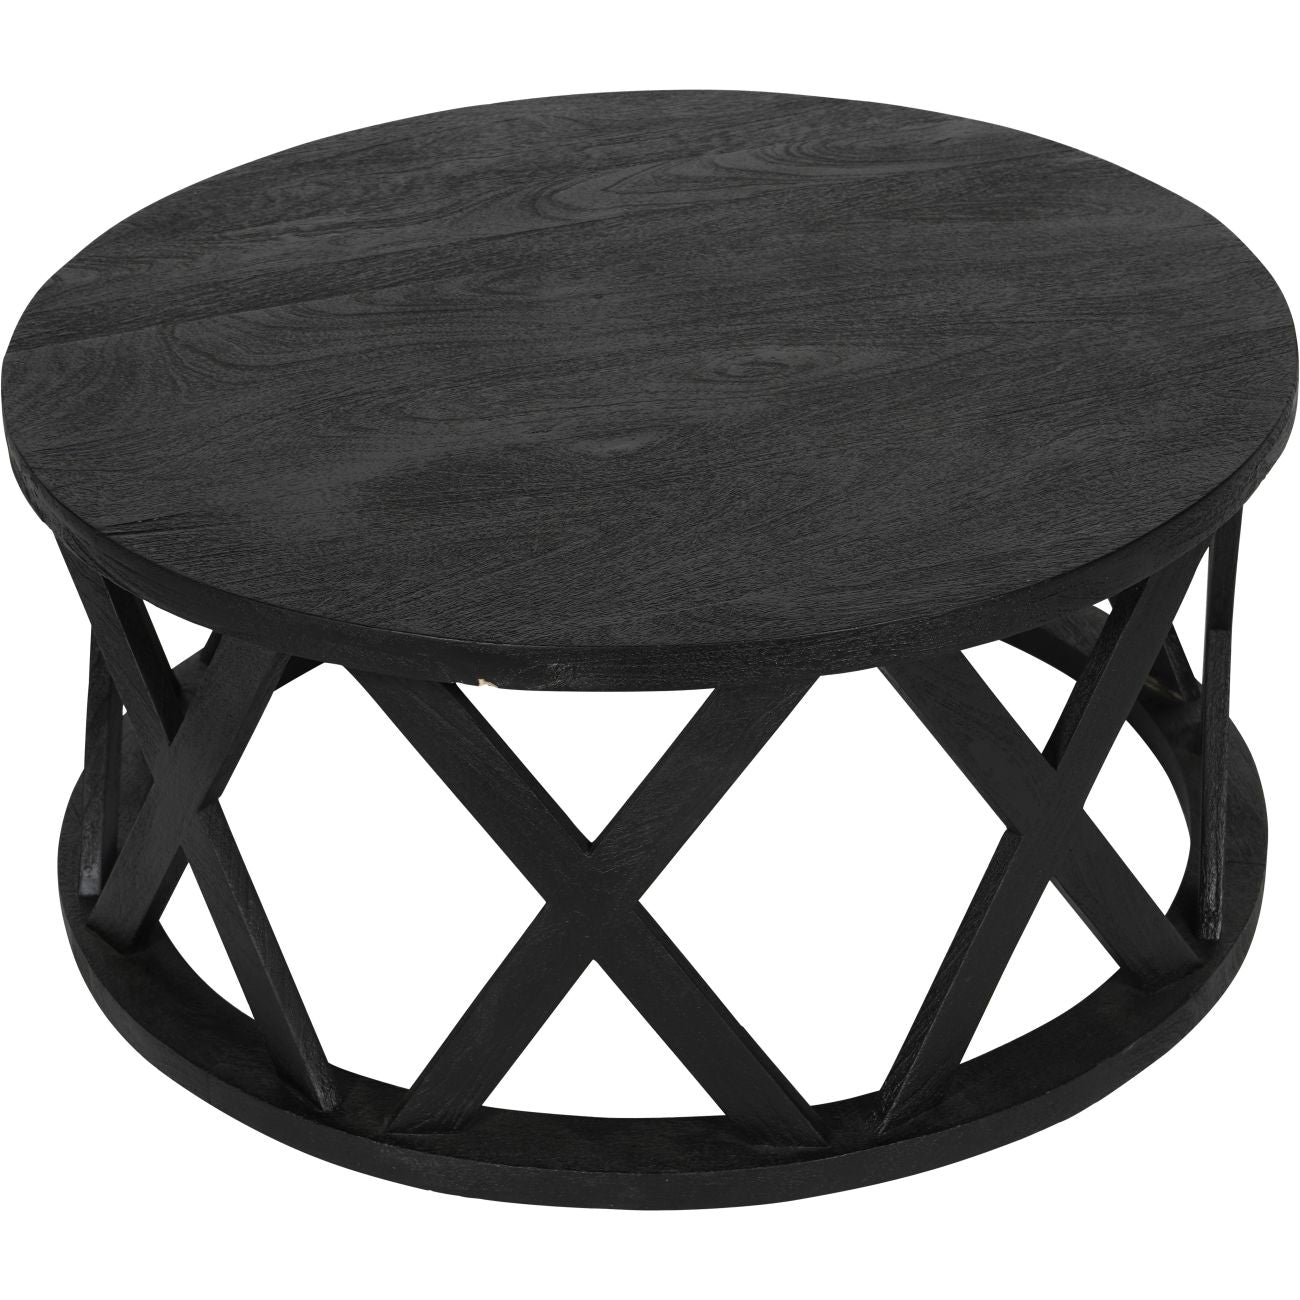 SOLU Solid Wooden Coffee Table in Black